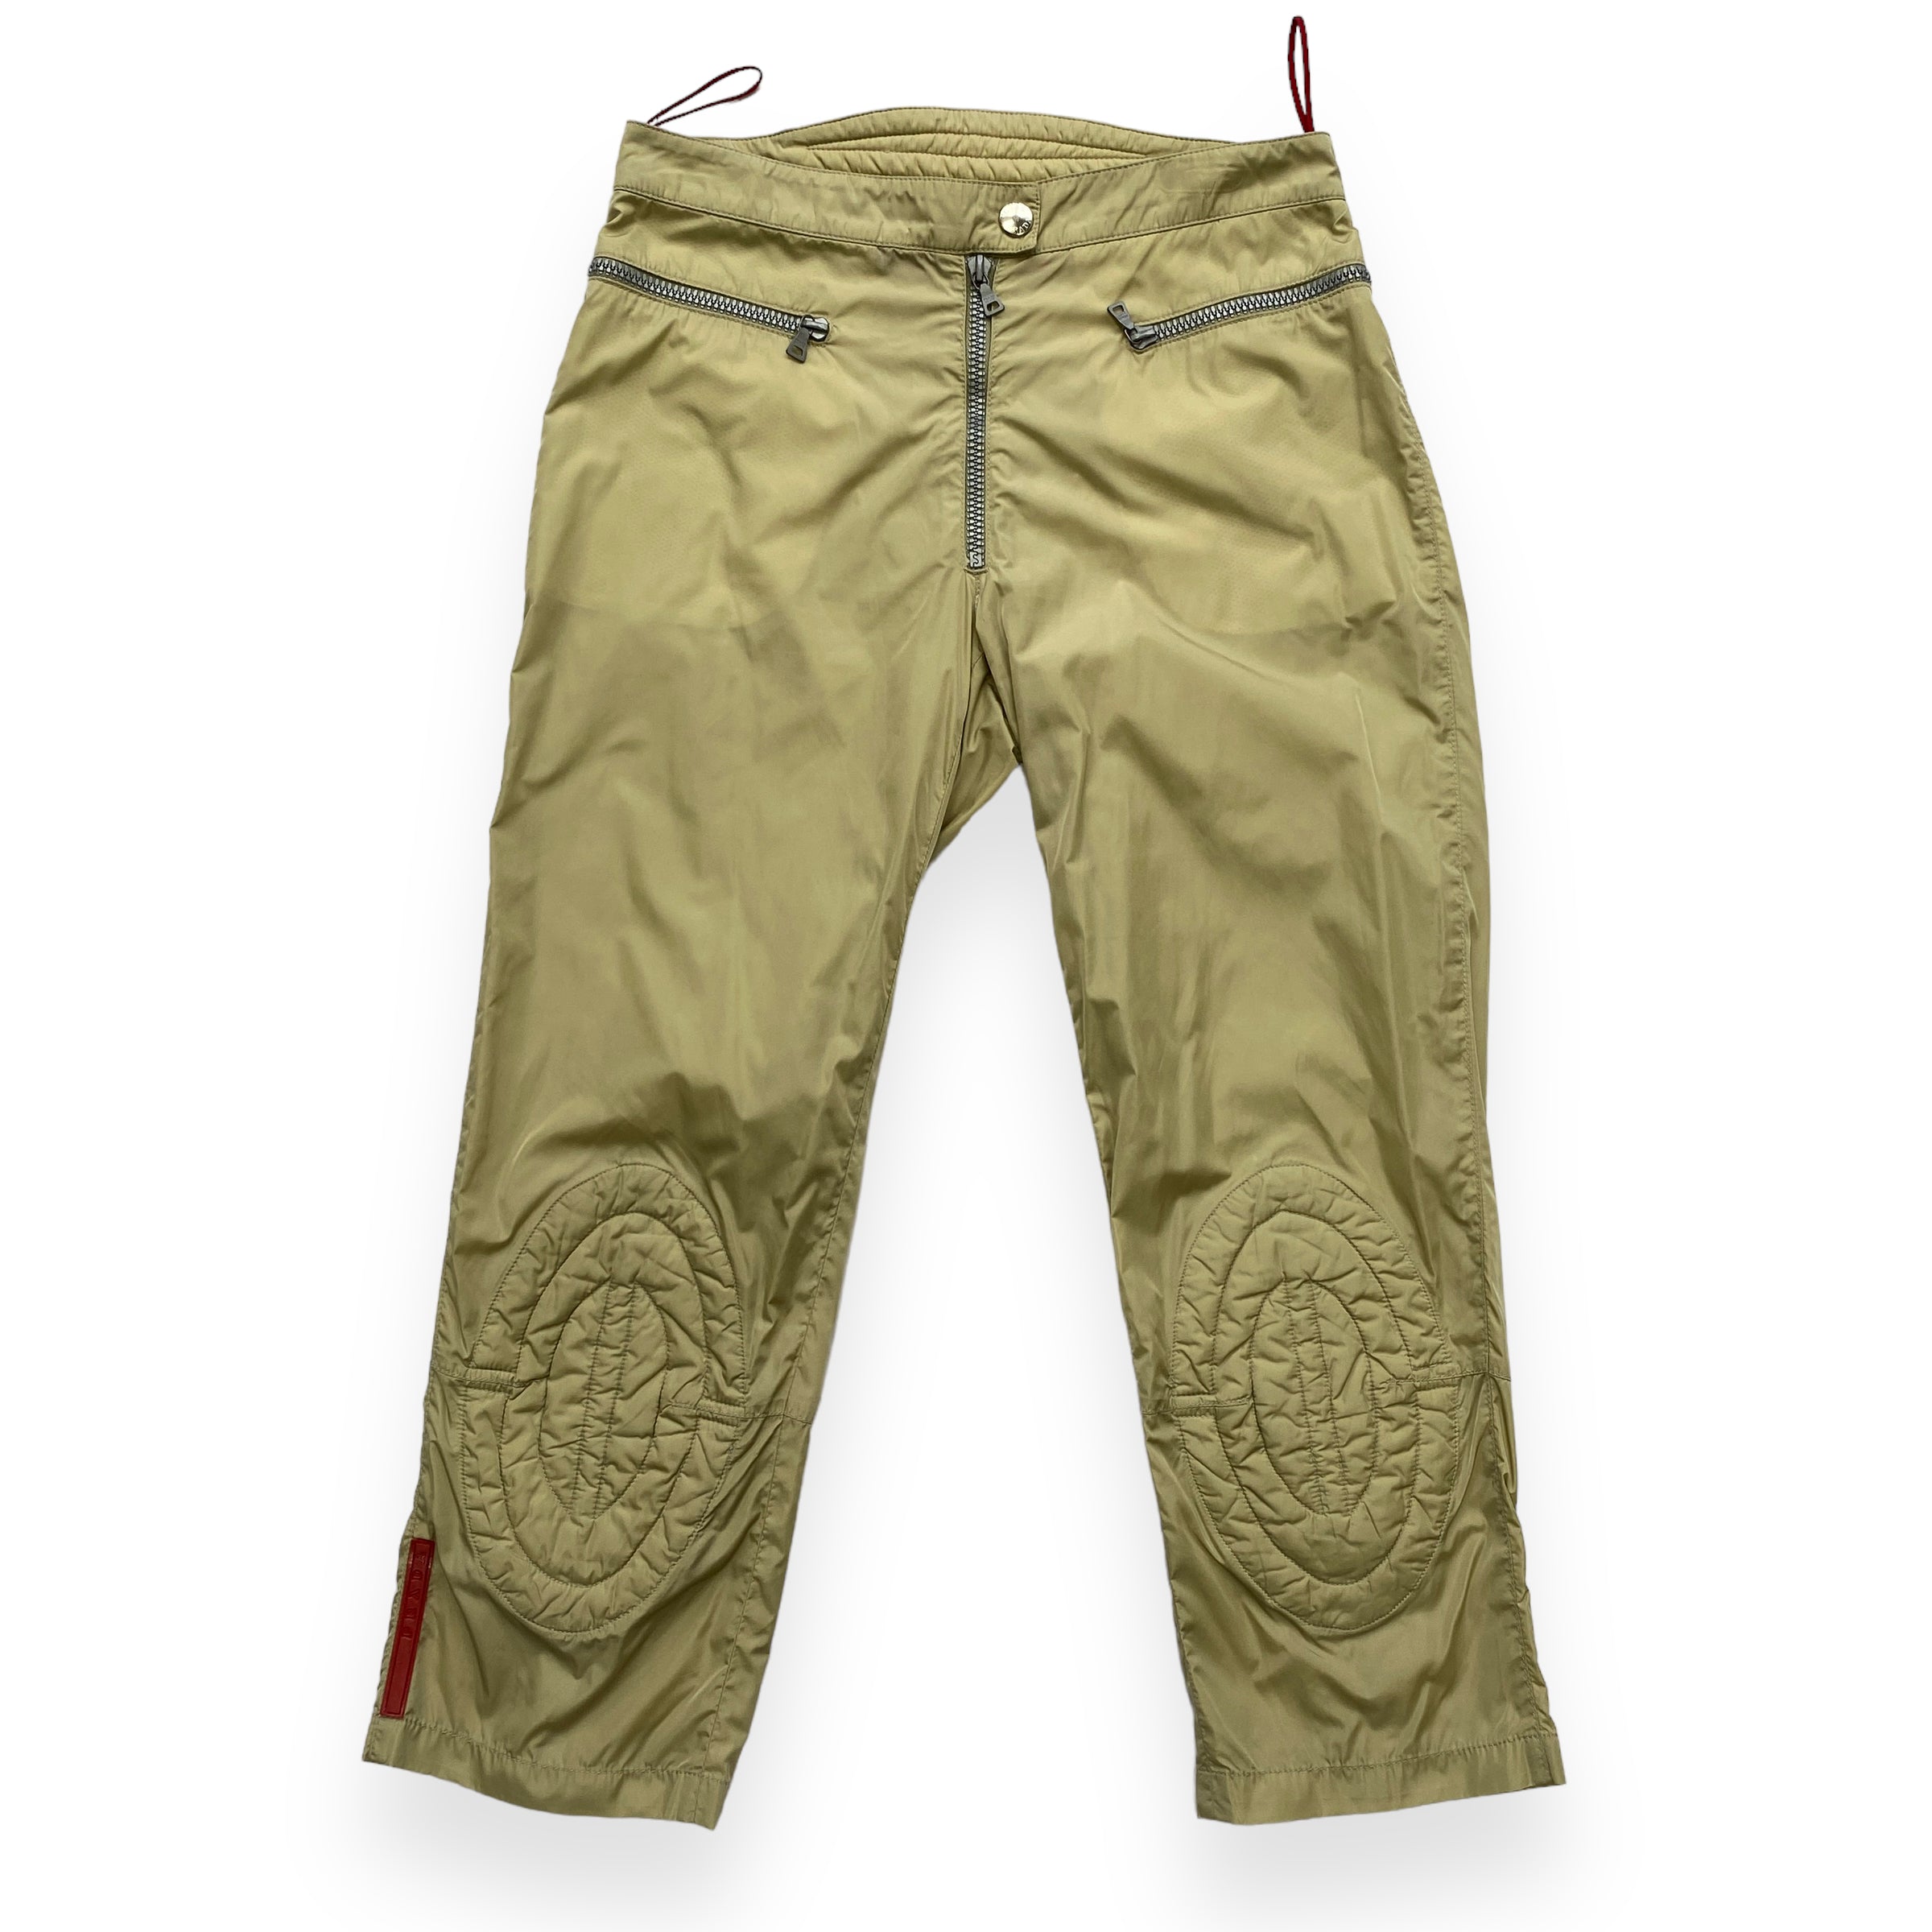 2000s prada sport cotton slacks 46 - メンズ